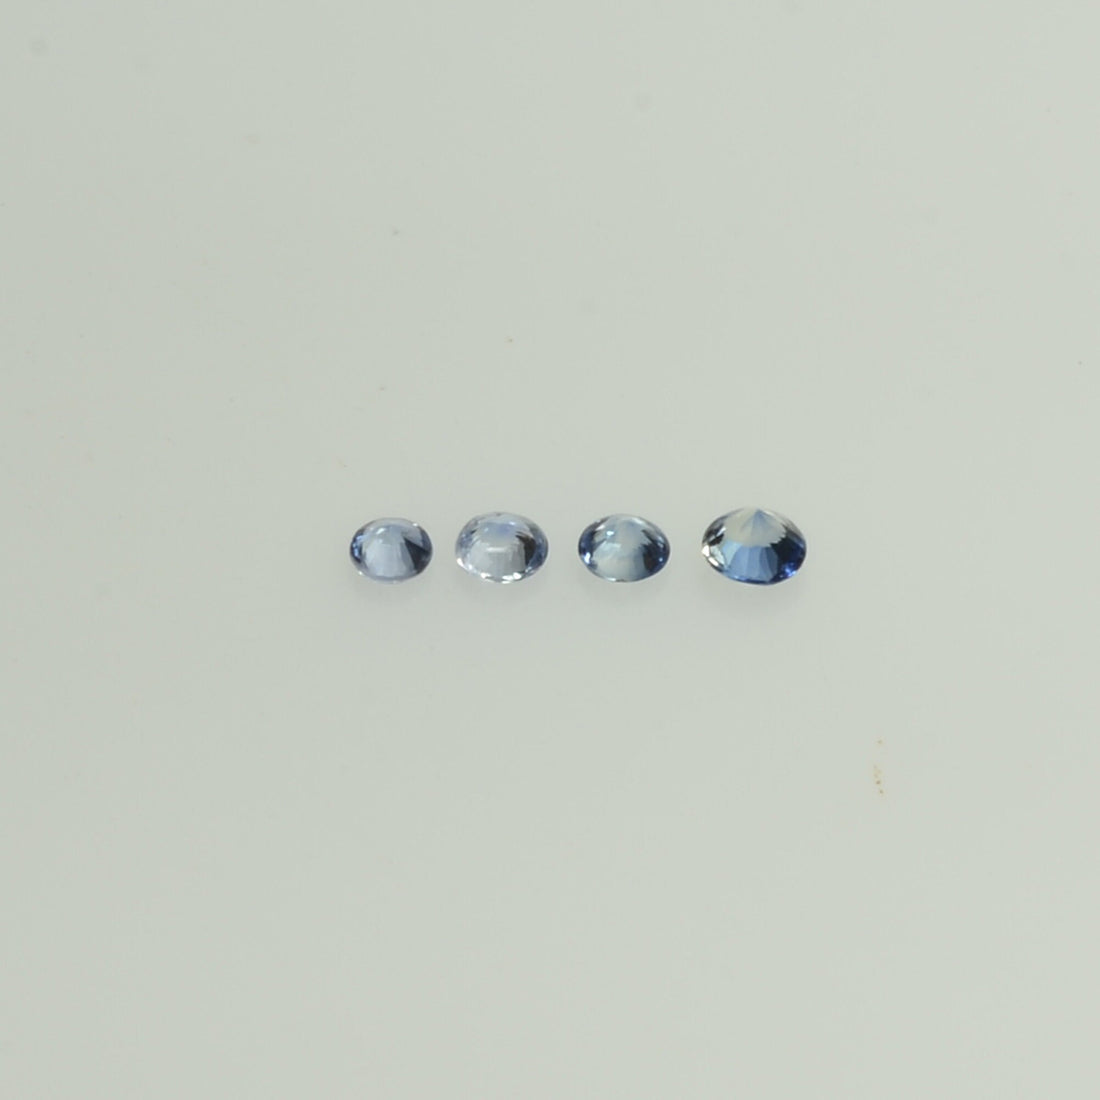 0.8-5 mm Natural BlueSapphire Loose Gemstone Round Diamond Cut Vs Quality Color